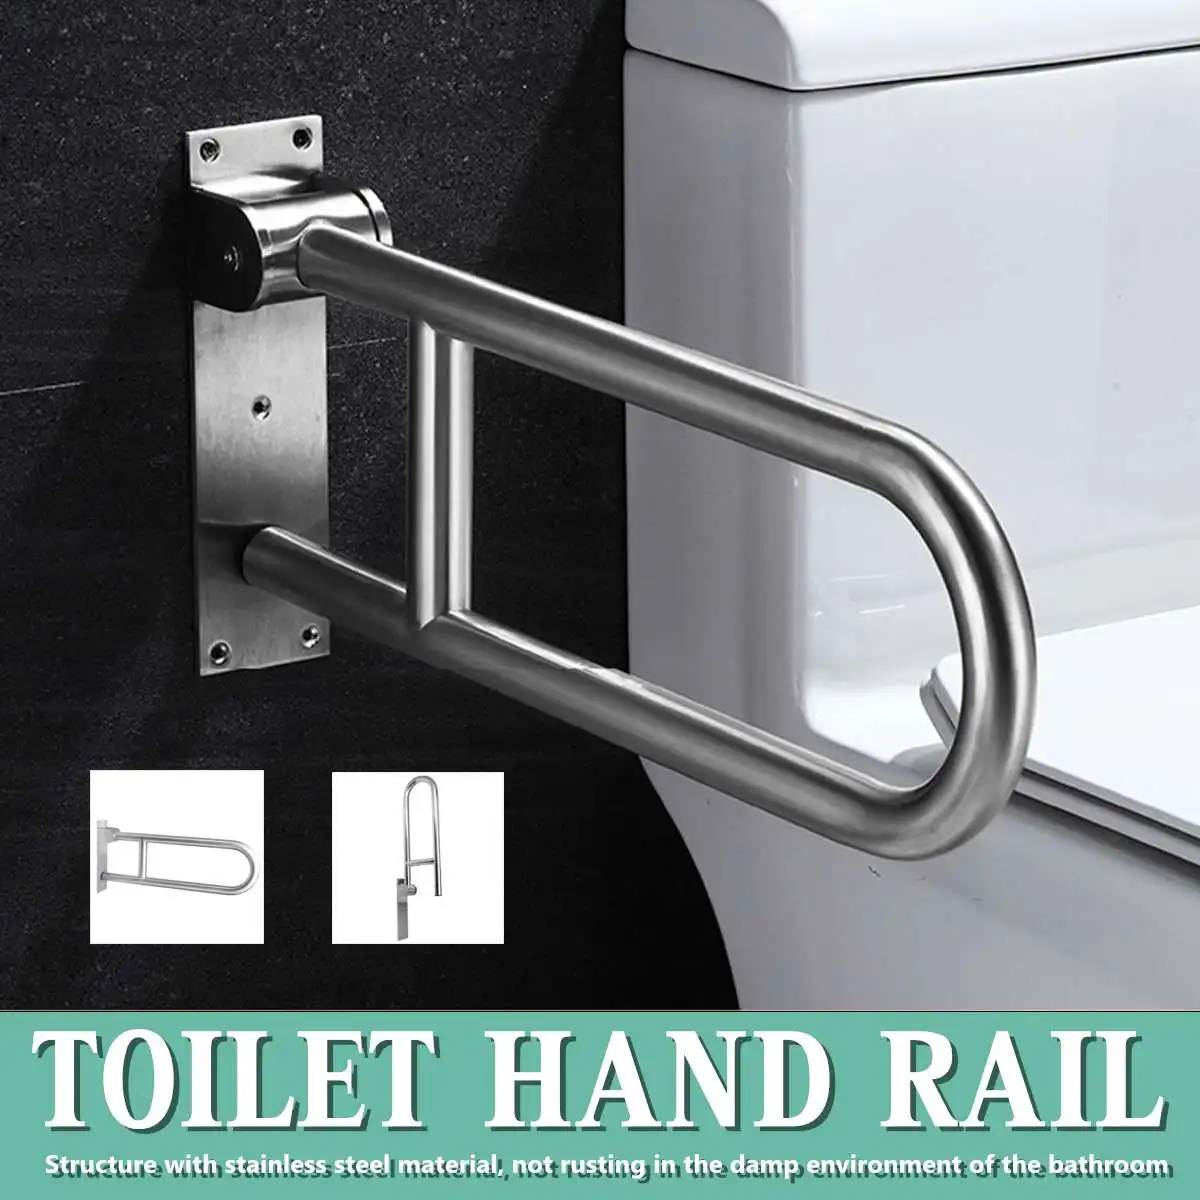 Bath Shower Handrail Stainless Steel Toilet Safety Frame Rail Grab Bar Handicap Bathroom Safety Grab Bars Bathroom Hand Grips